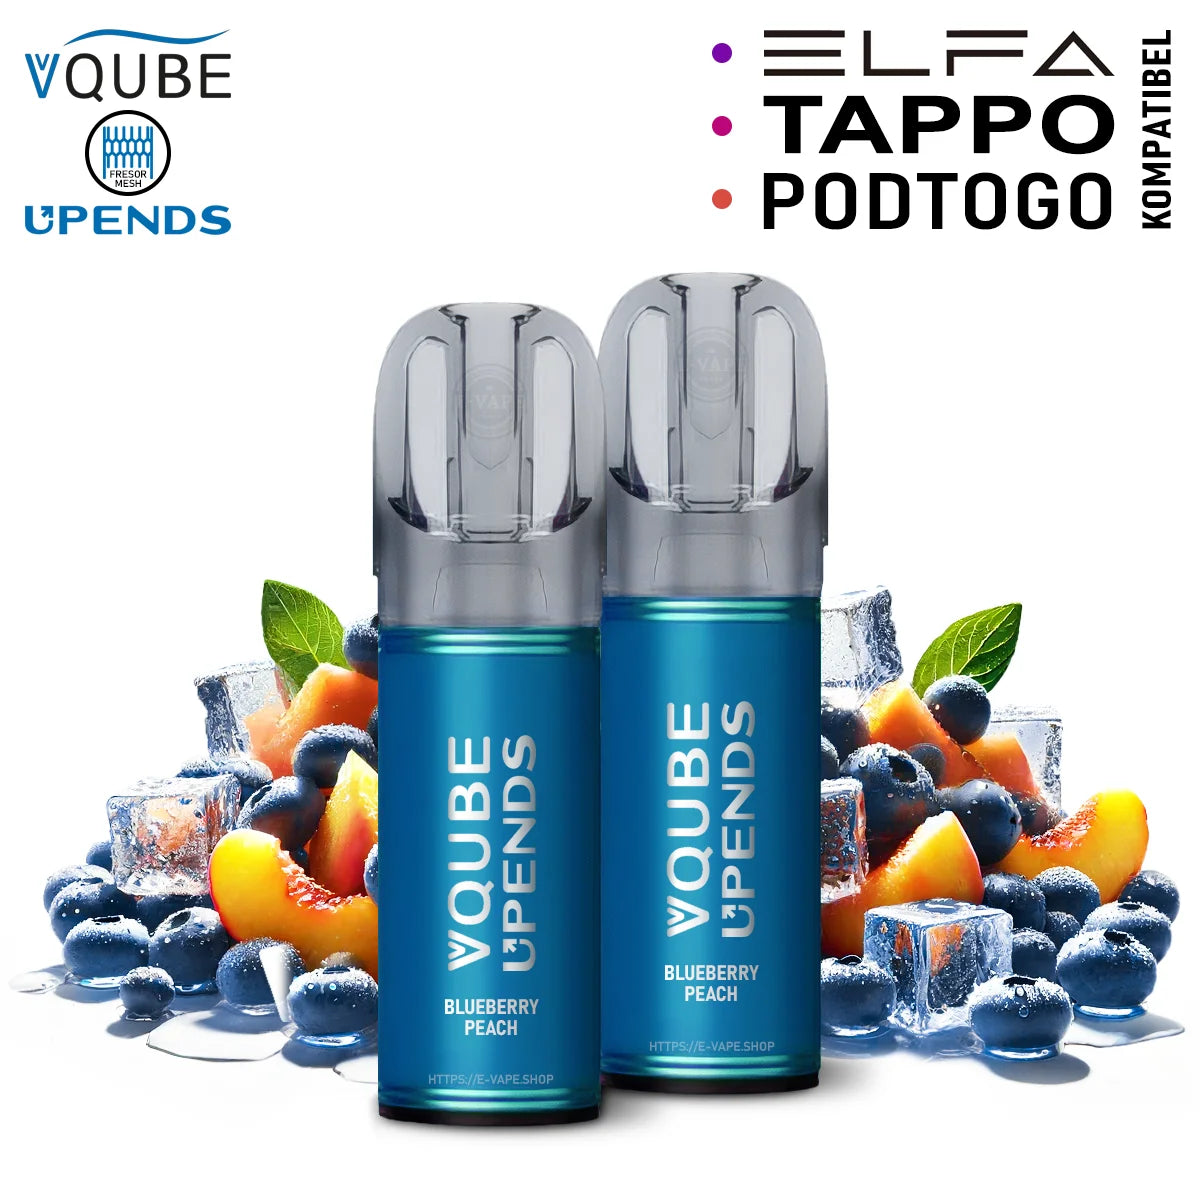 Vqube Upends Pod Blueberry Peach 20mg ELFA / Tappo / Pod2Go